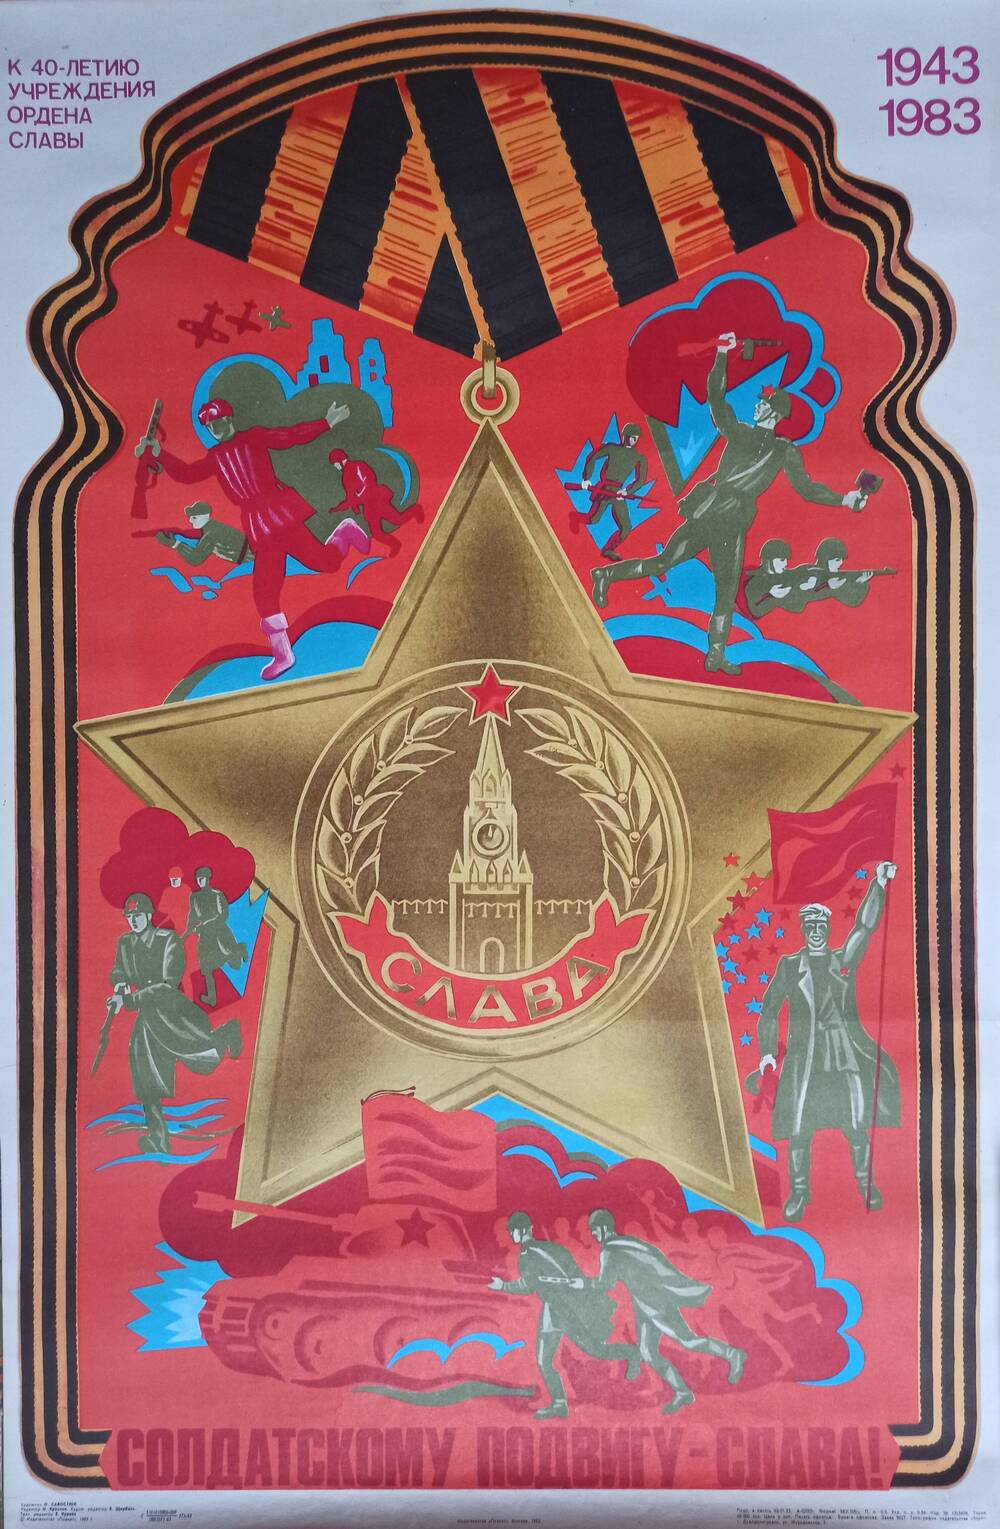 Плакат
«Солдатскому подвигу – слава!»